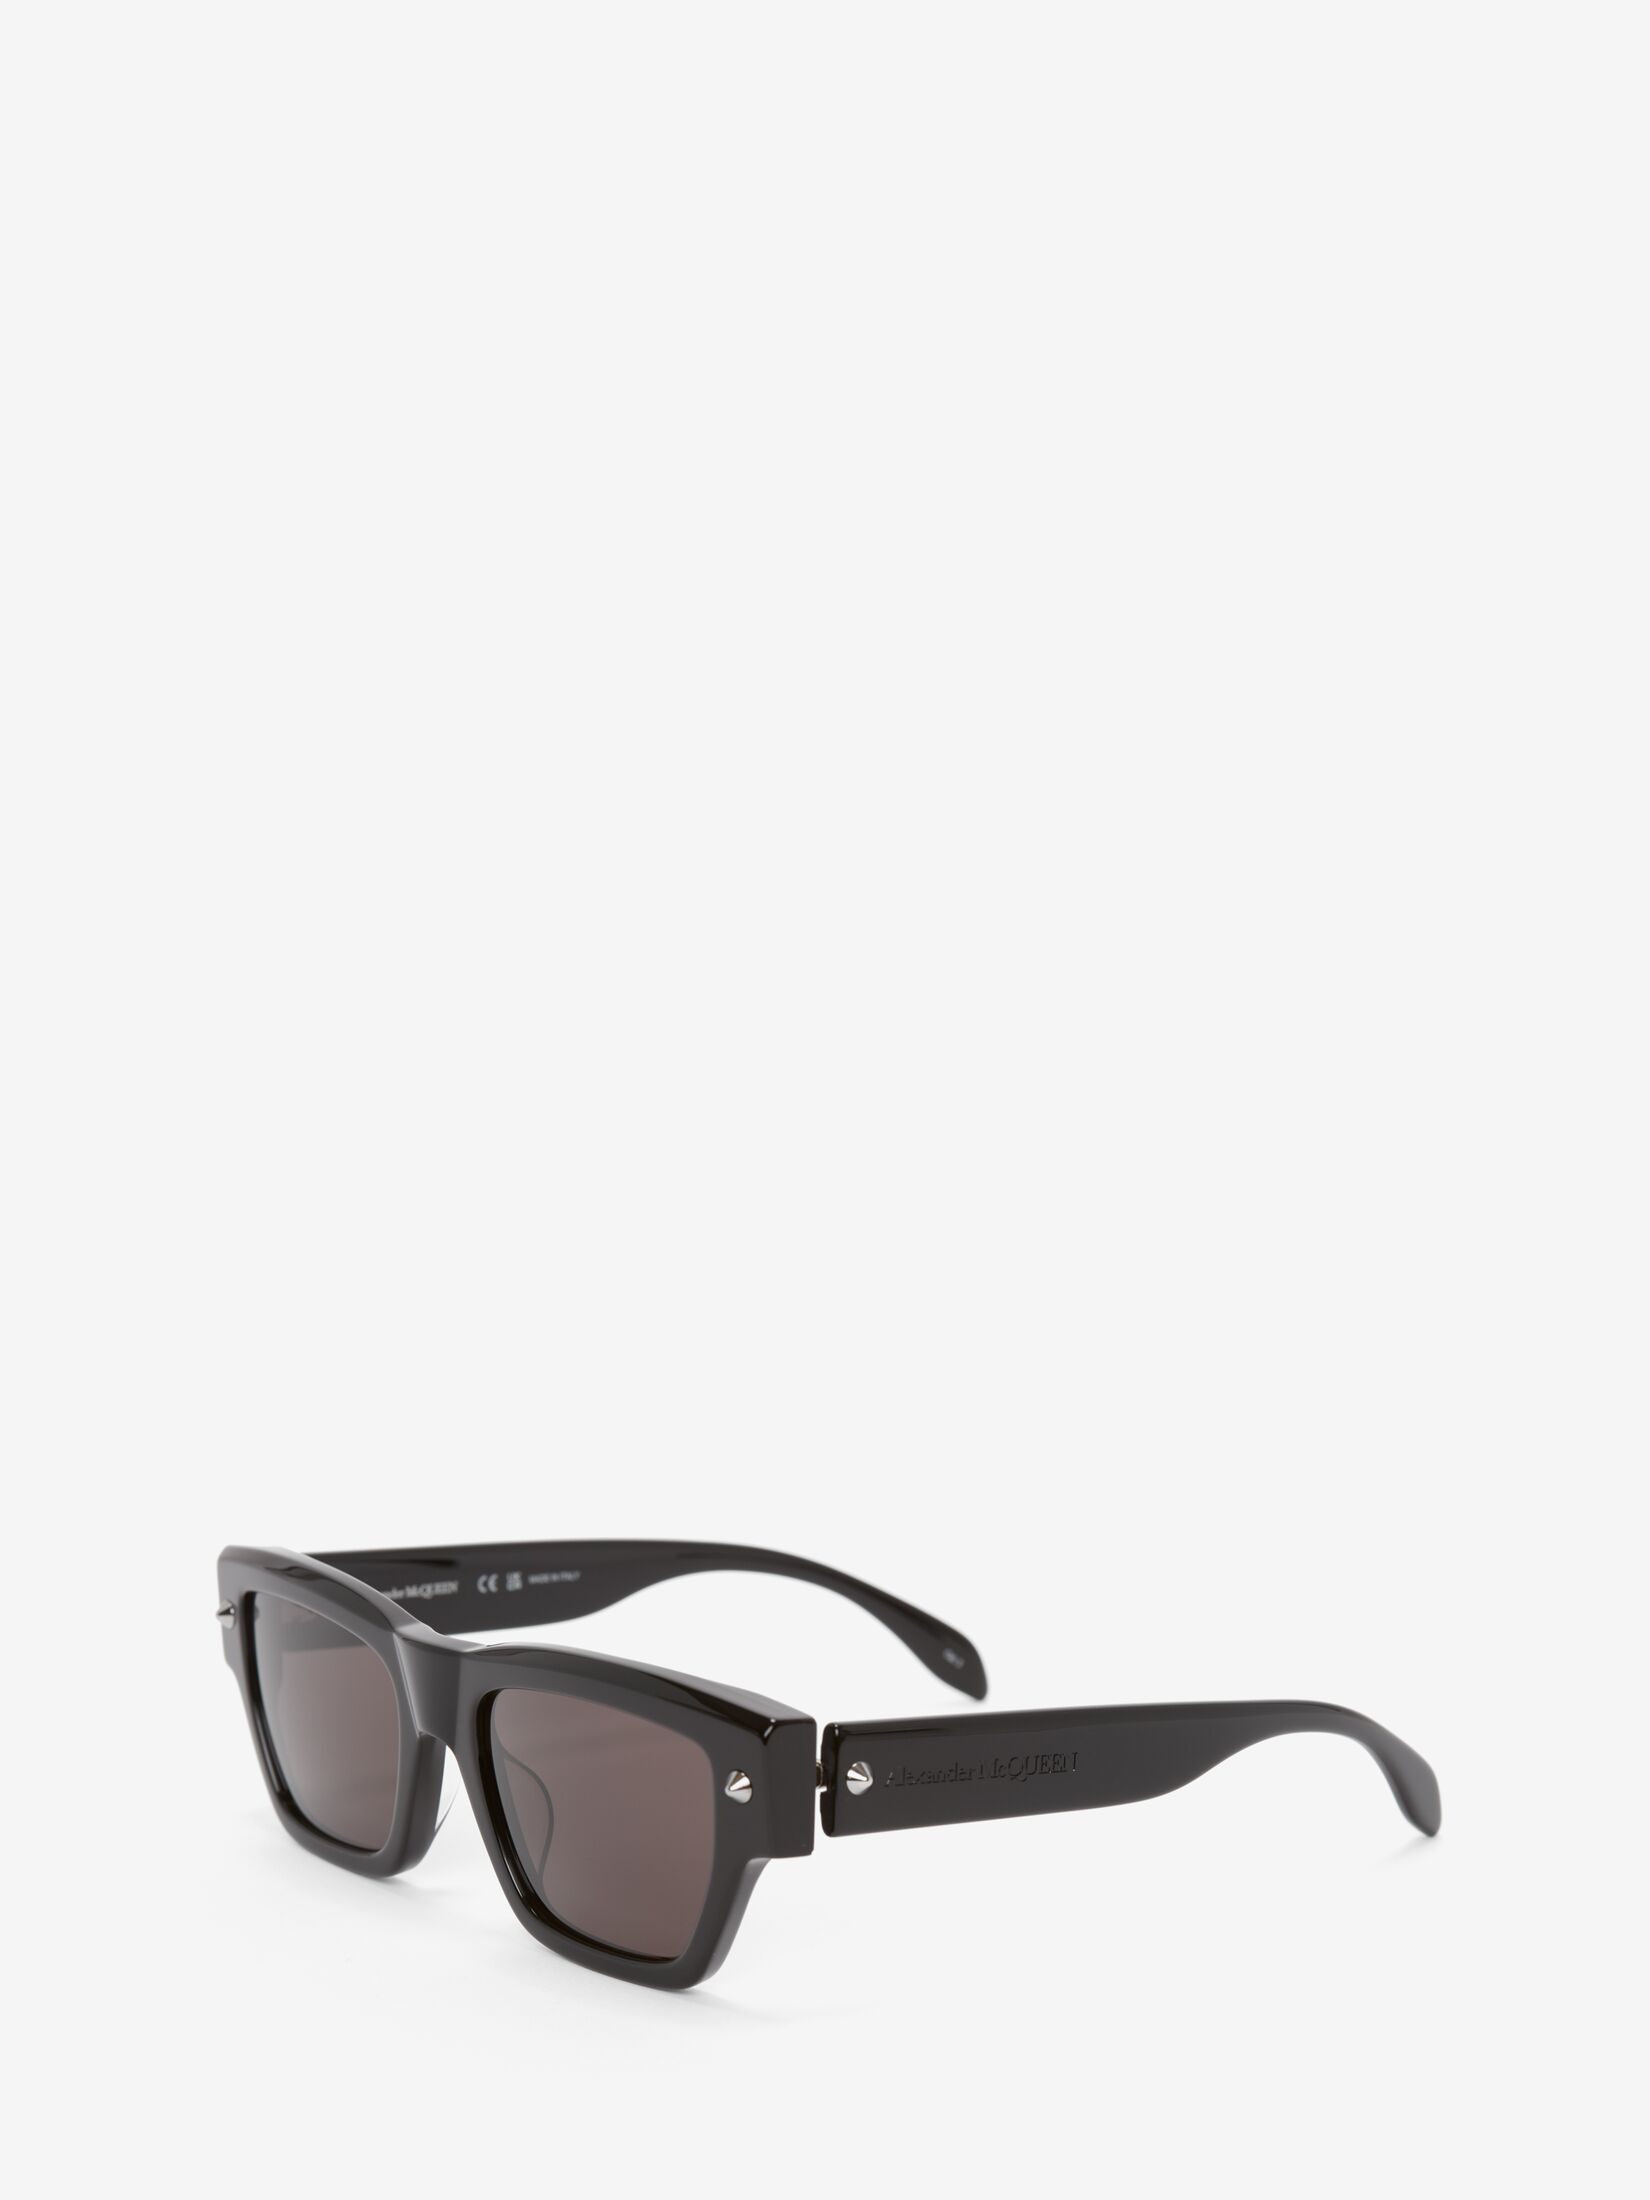 Men's Spike Studs Rectangular Sunglasses in Black/smoke - 2